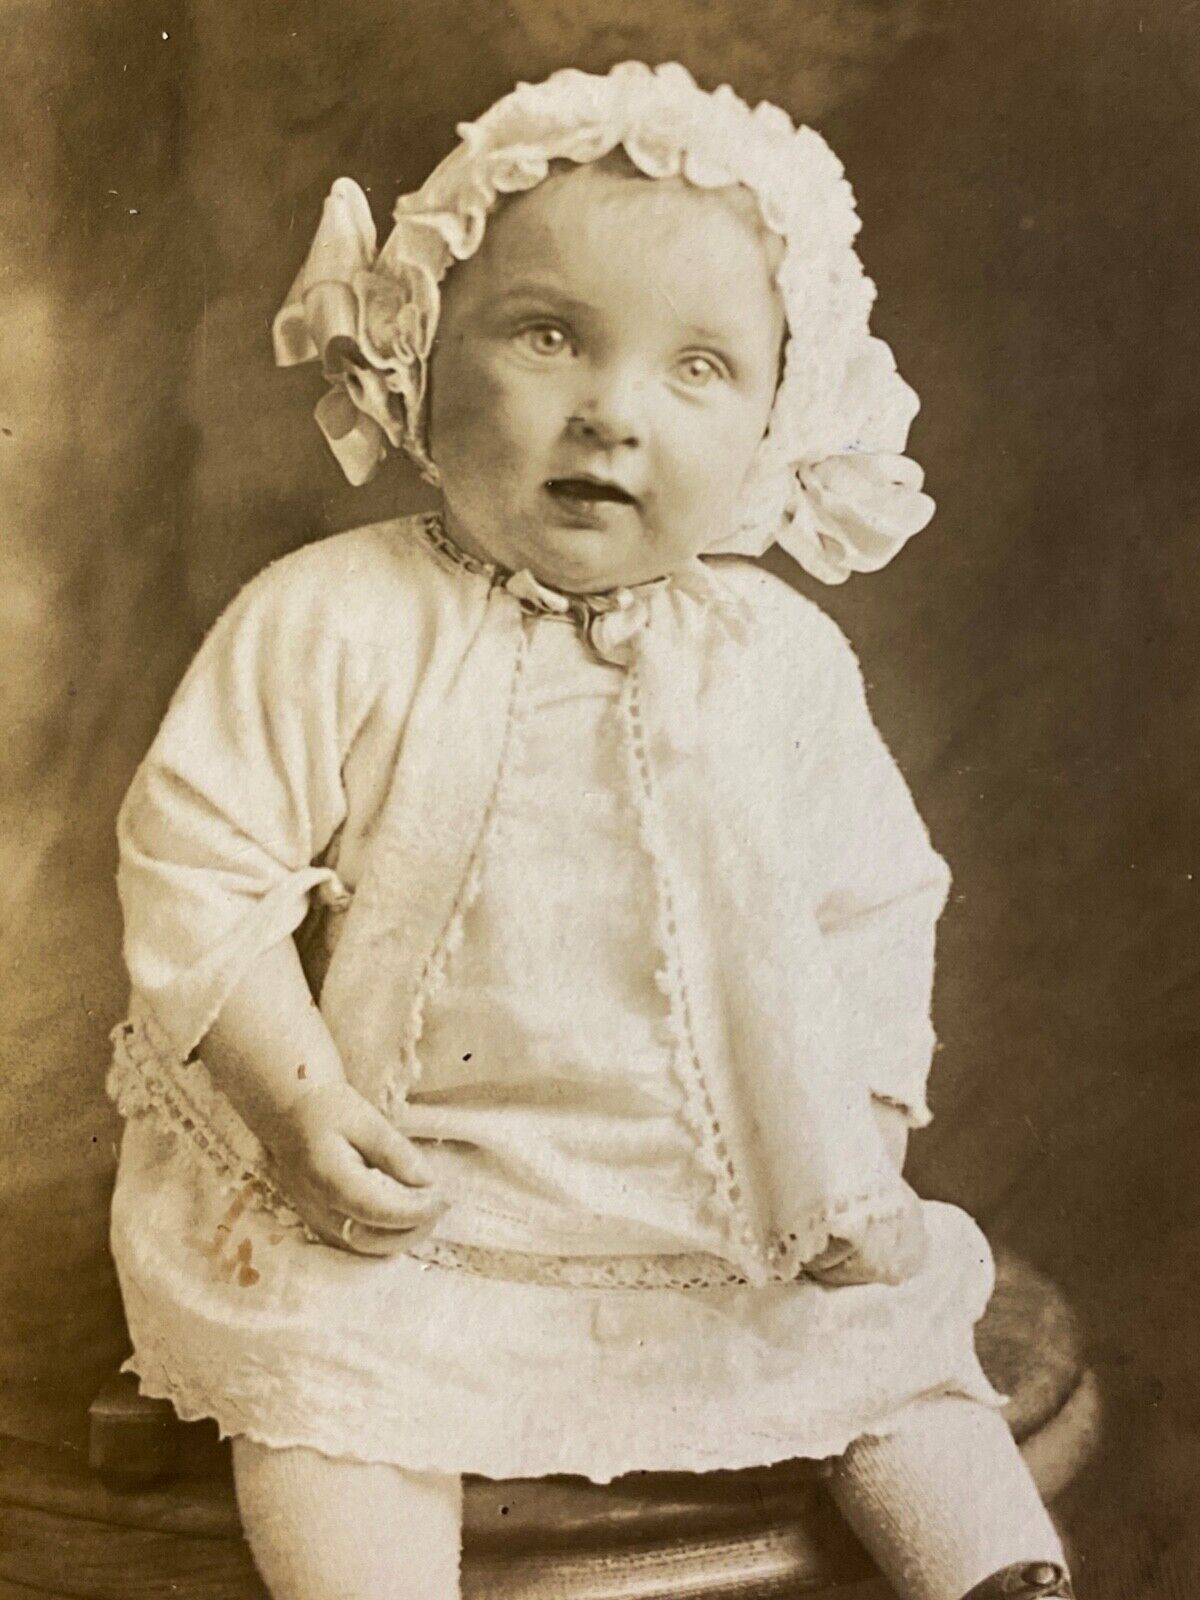 1913 RPPC - BABY EDITH GRUNDY antique real photograph postcard SAN FRANCISCO, CA